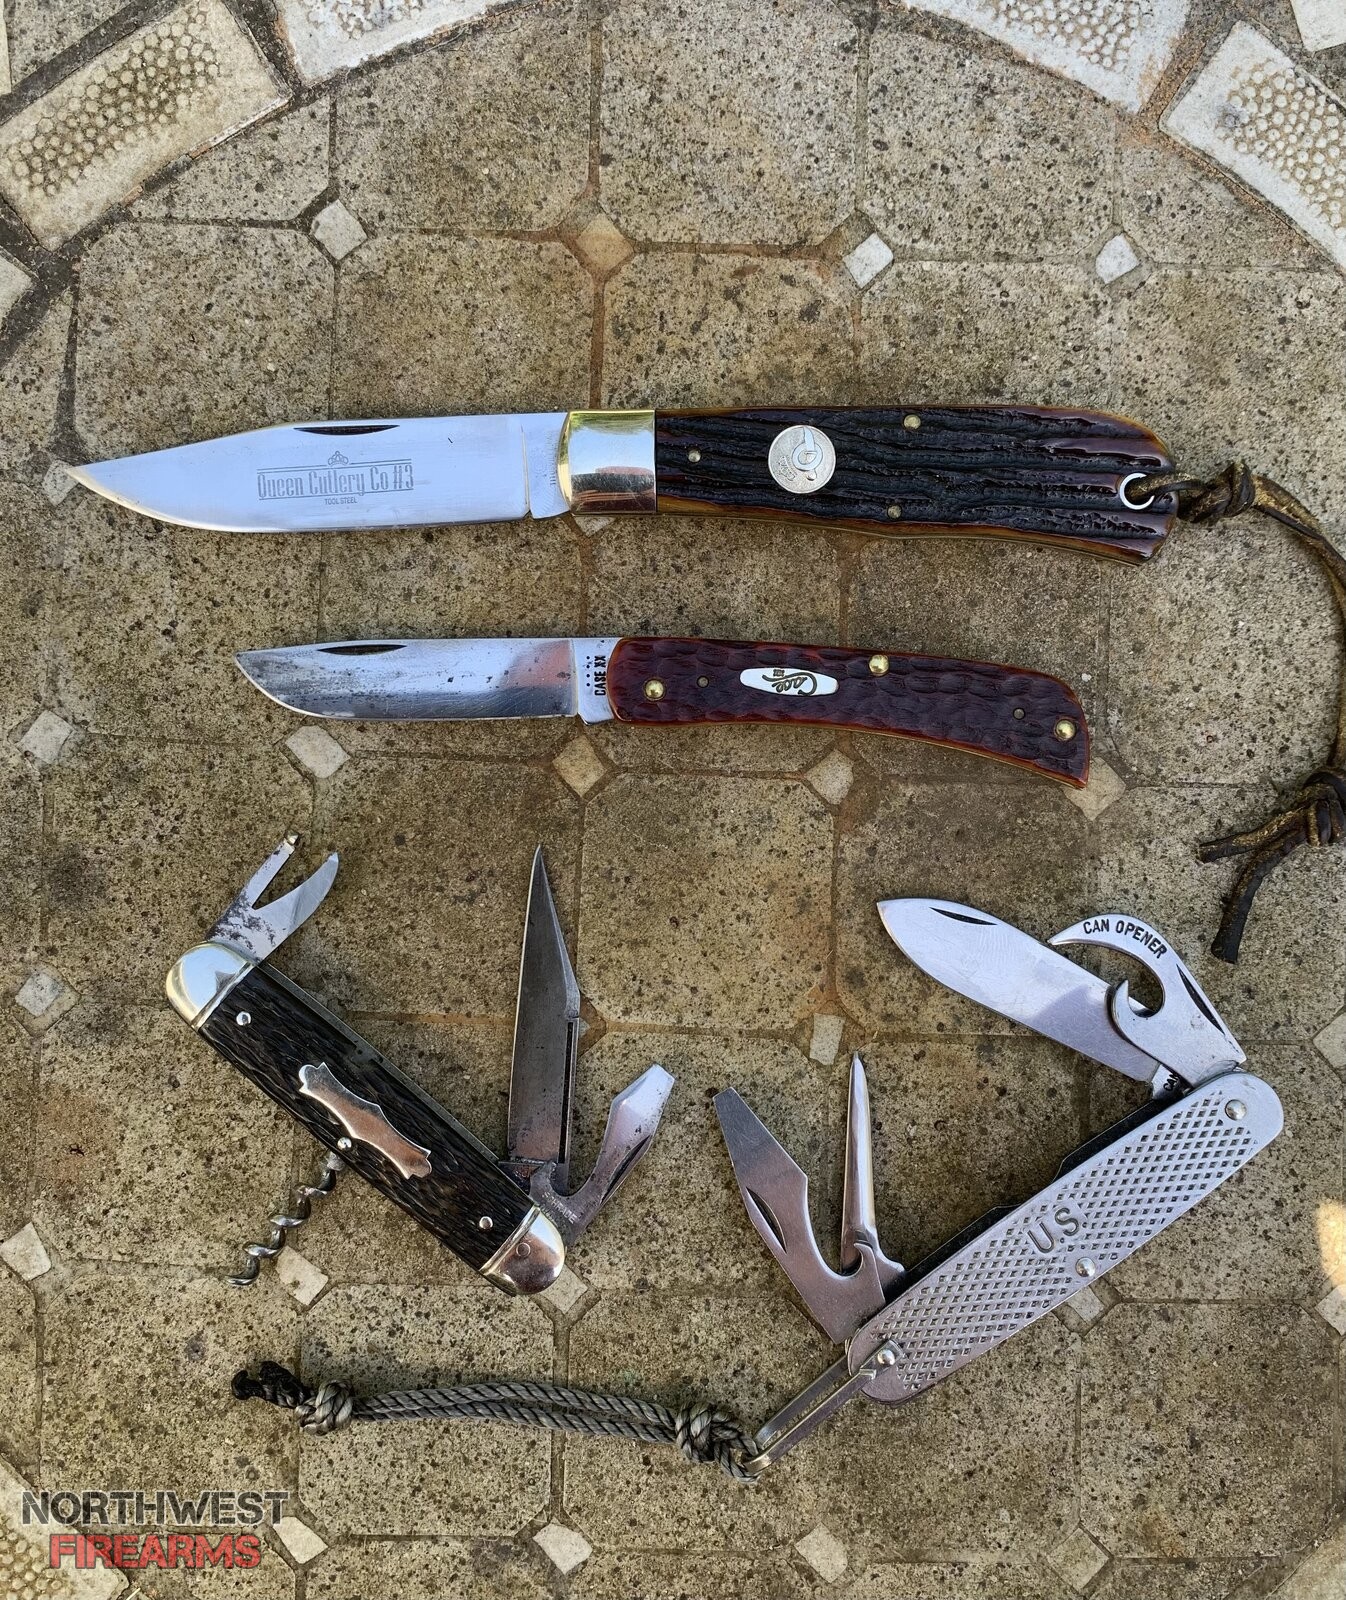 Some favorite folding knives.